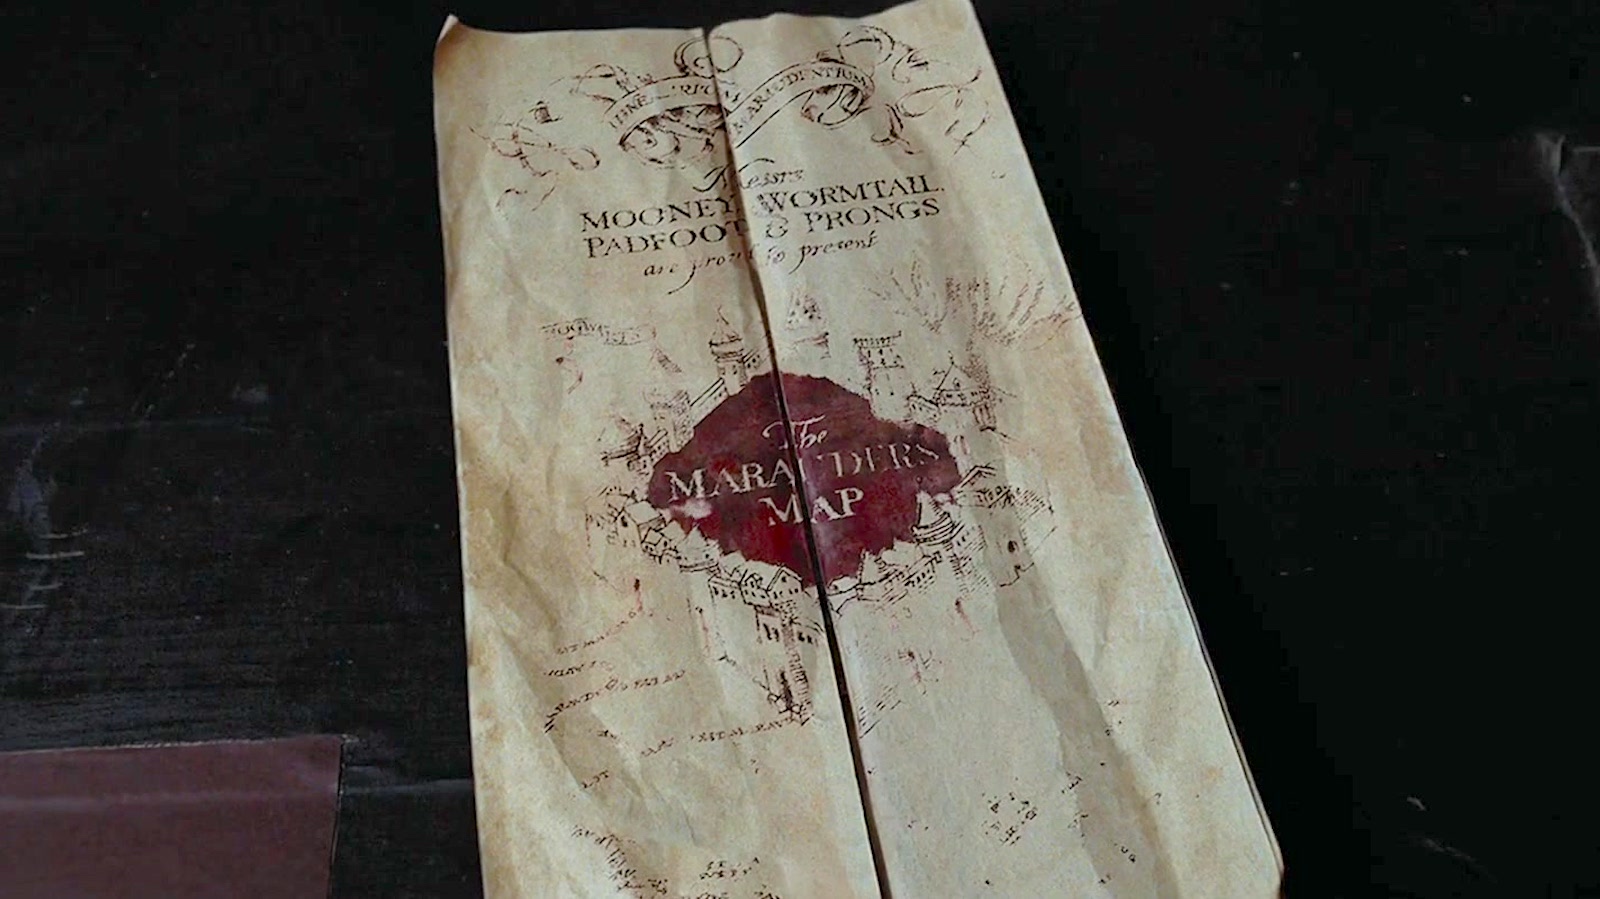 The Marauder's Map in 'Harry Potter and the Prisoner of Azkaban'